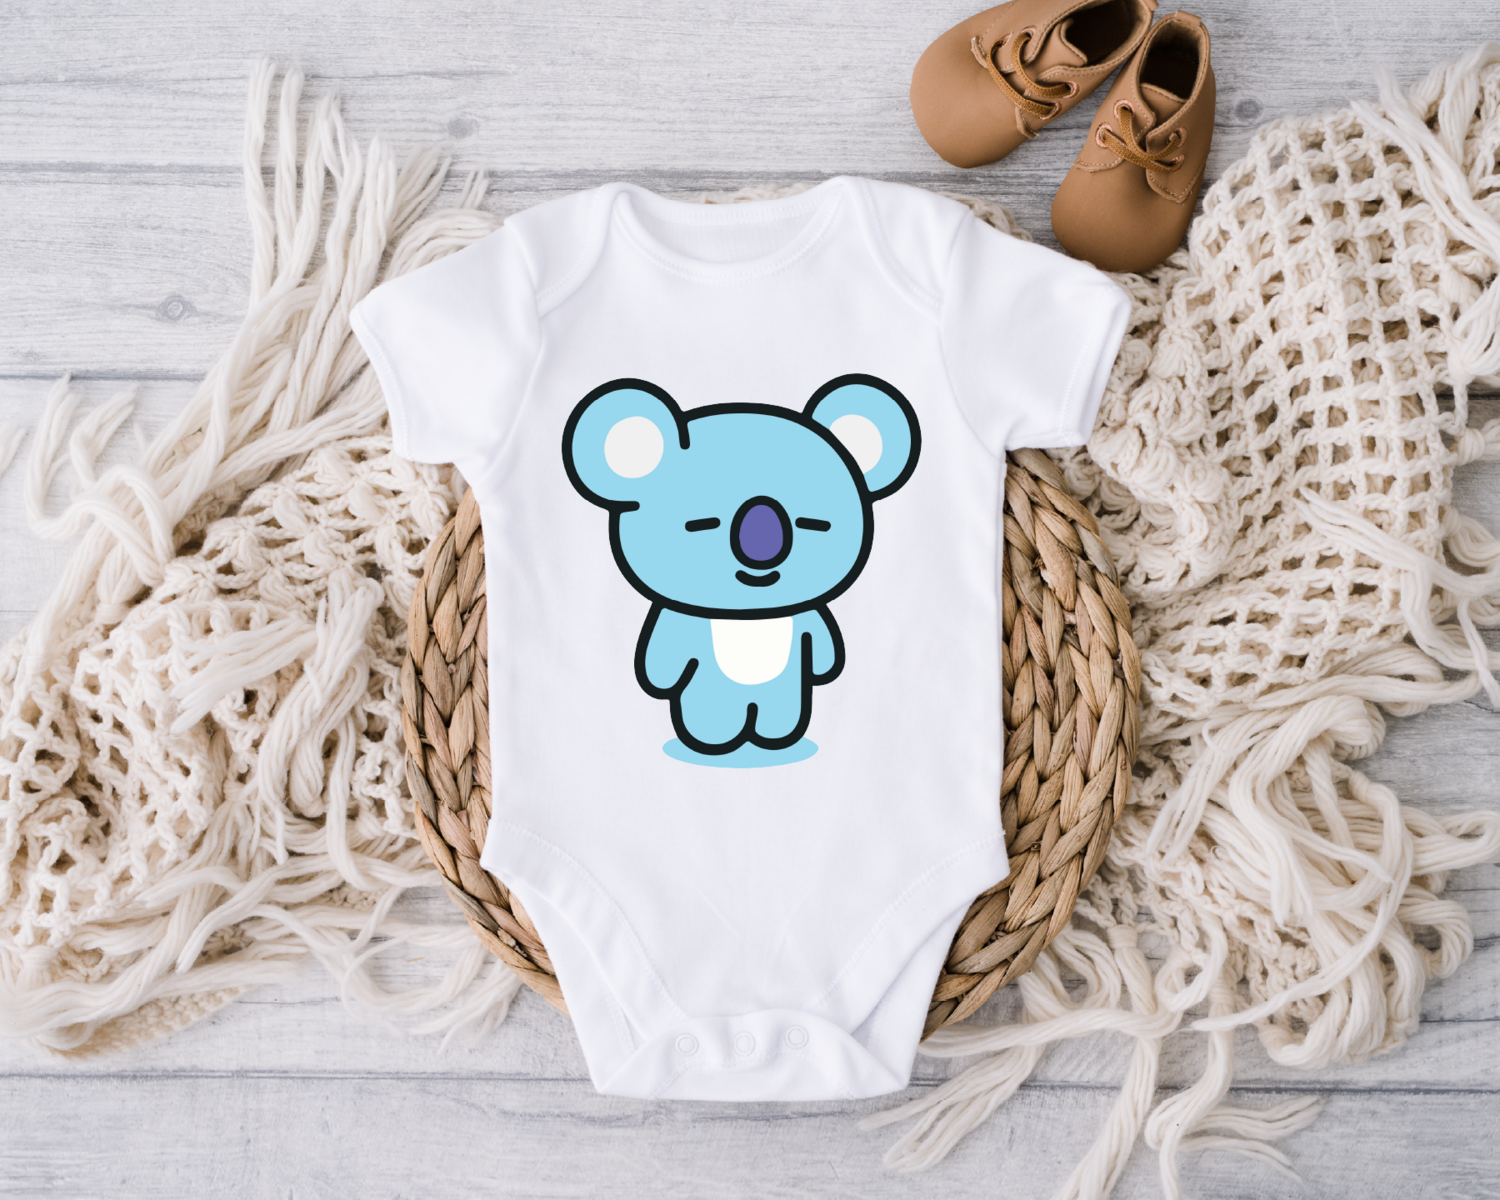 Cute Koala Baby Onesie, Blue Koala Baby Clothes, Funny Animal Onesie, Koala Bodysuit